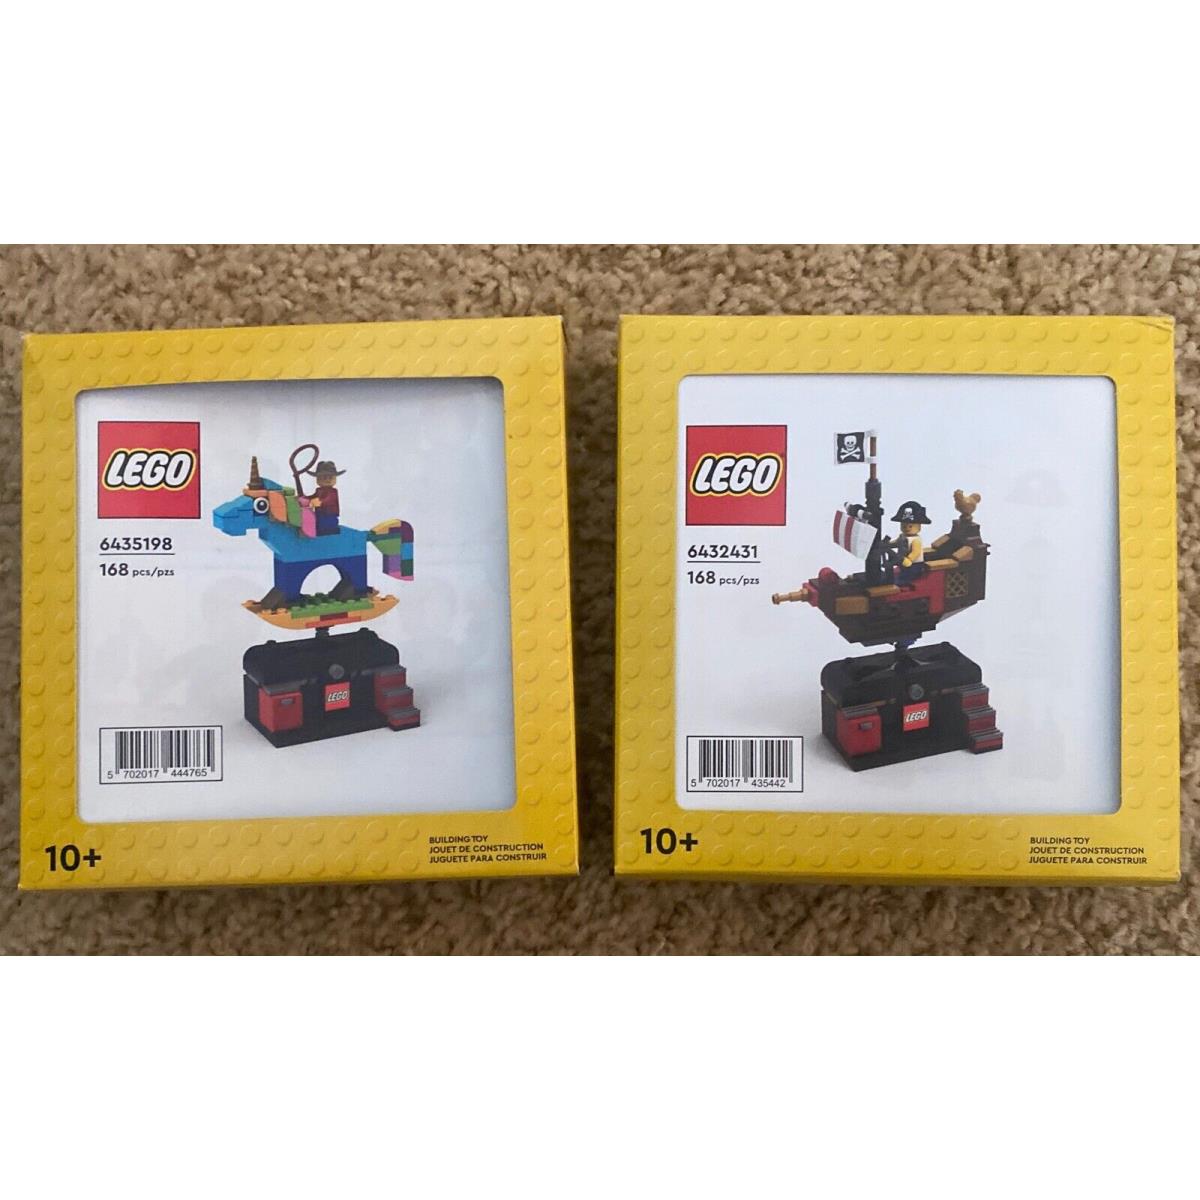 Lego Fantasy Adventure Rides 6432431 + 6435198